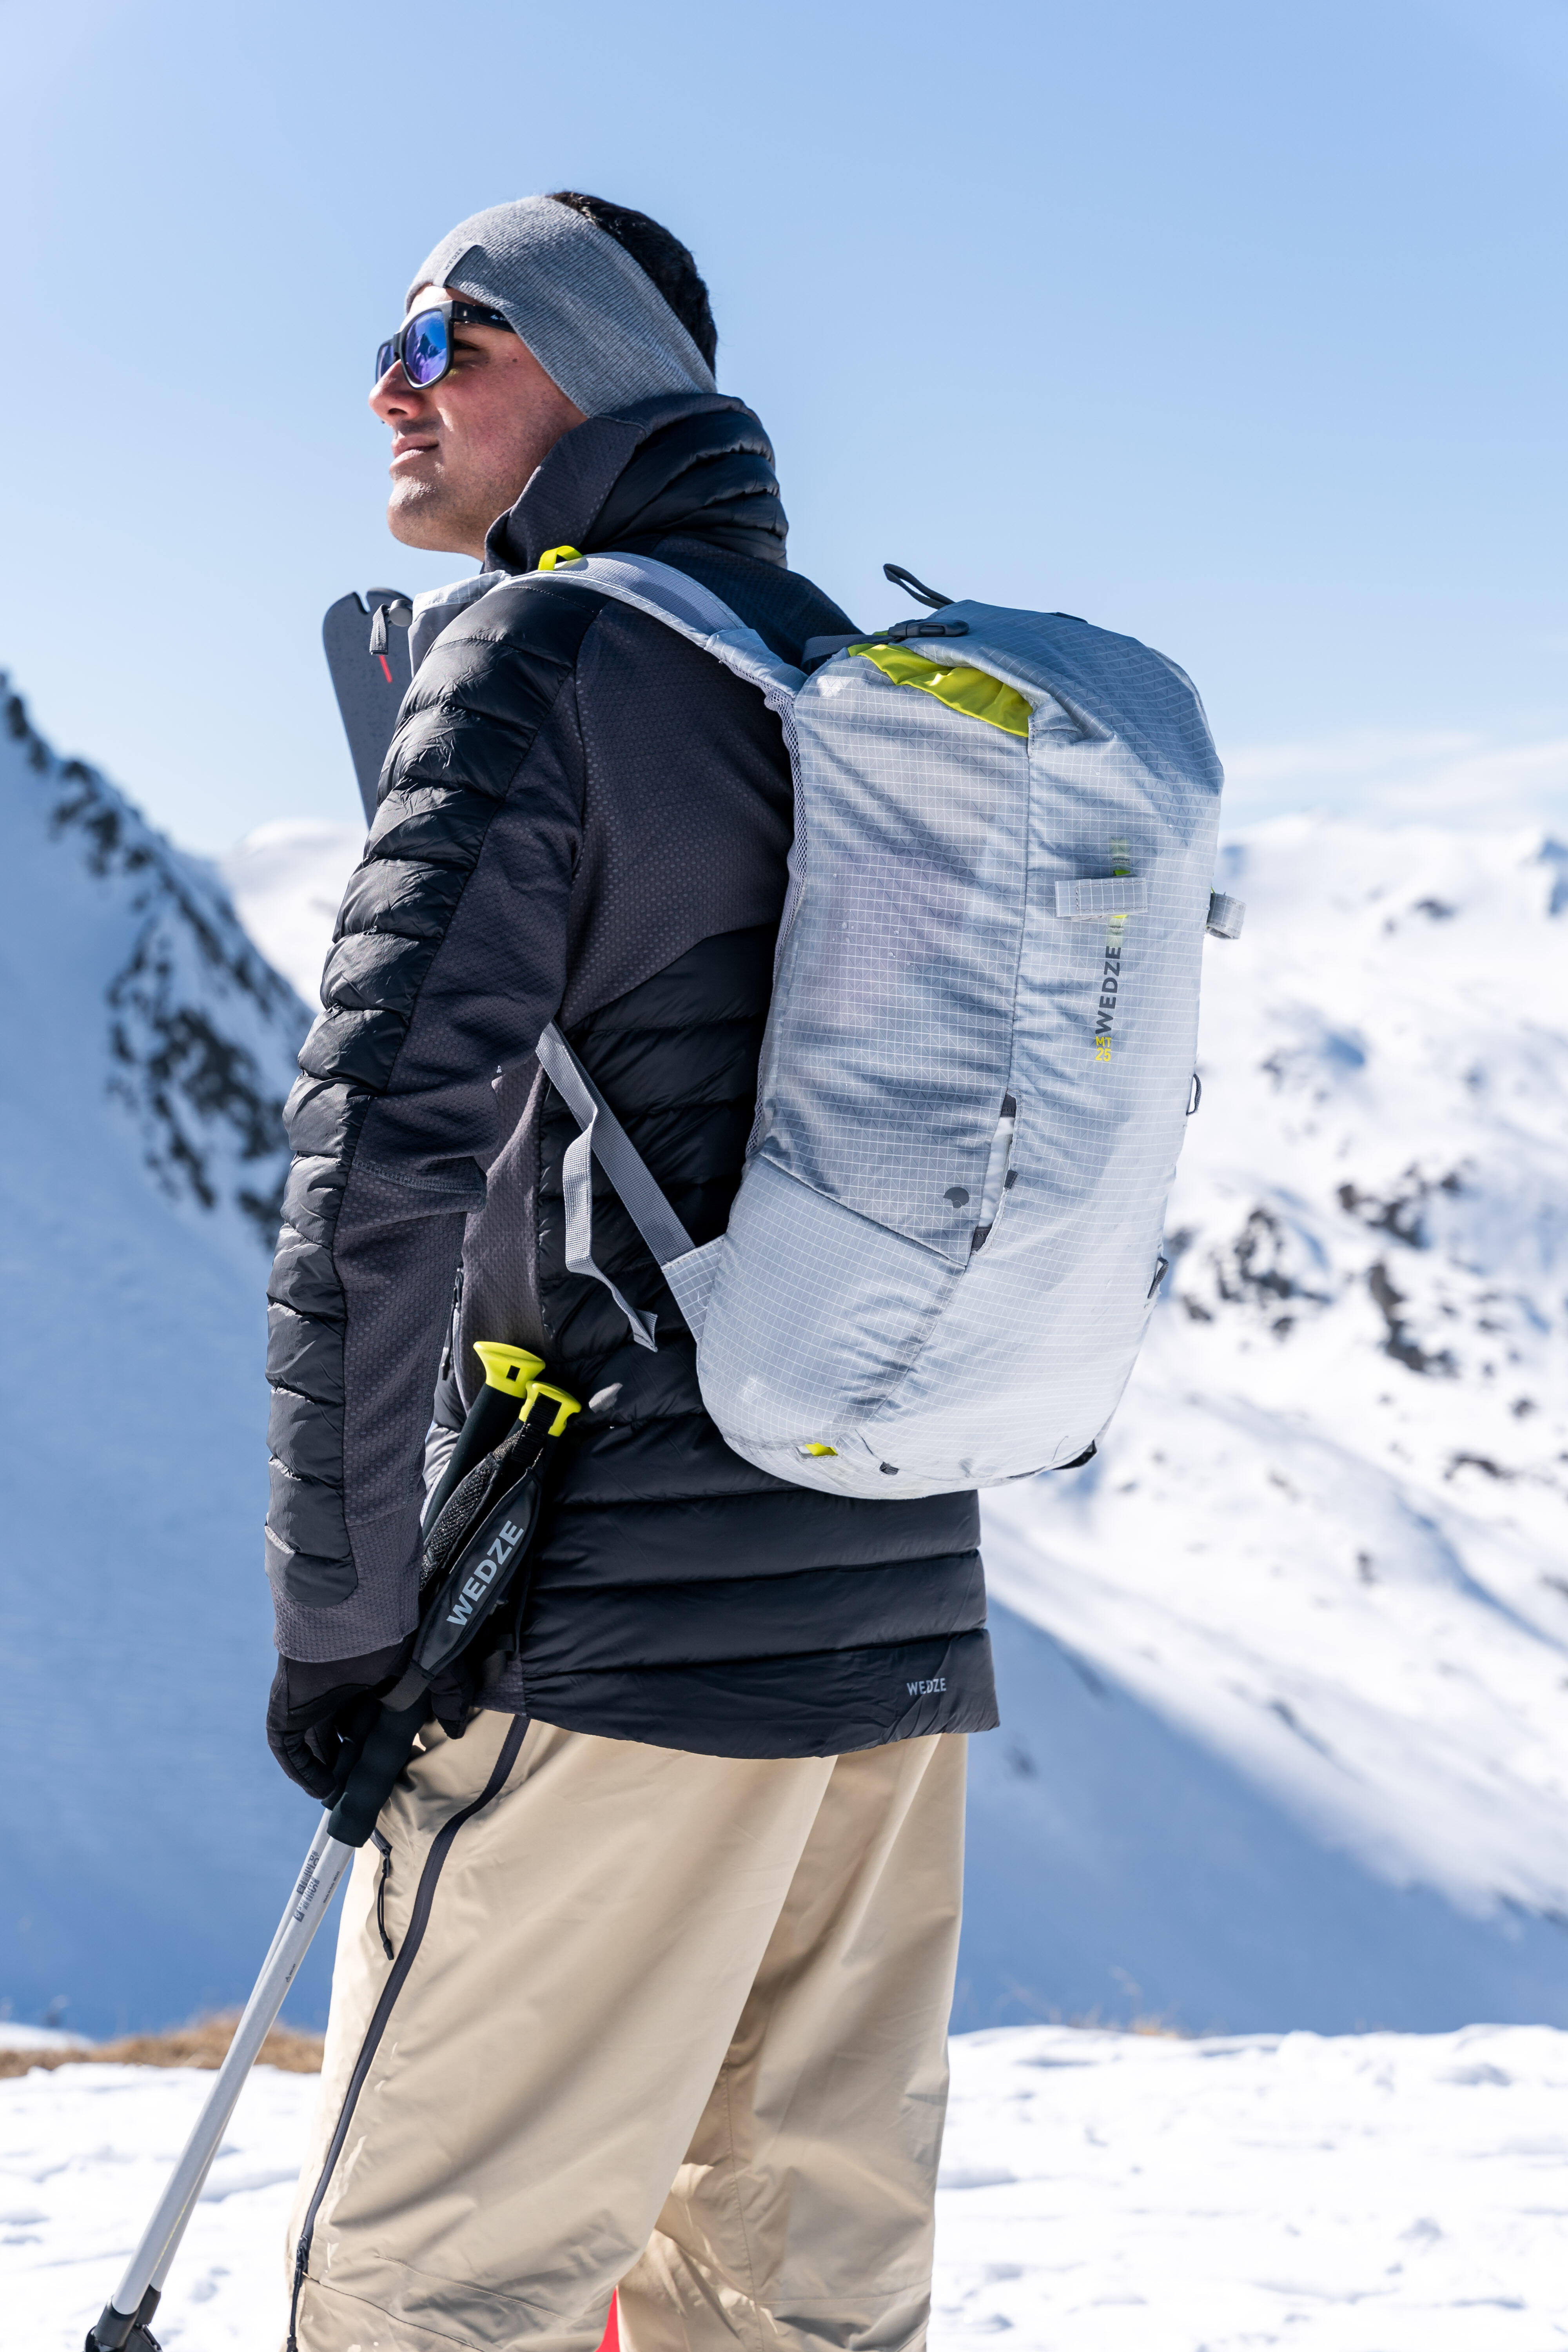 Ski Touring Backpack 25 L - MT 25 - WEDZE